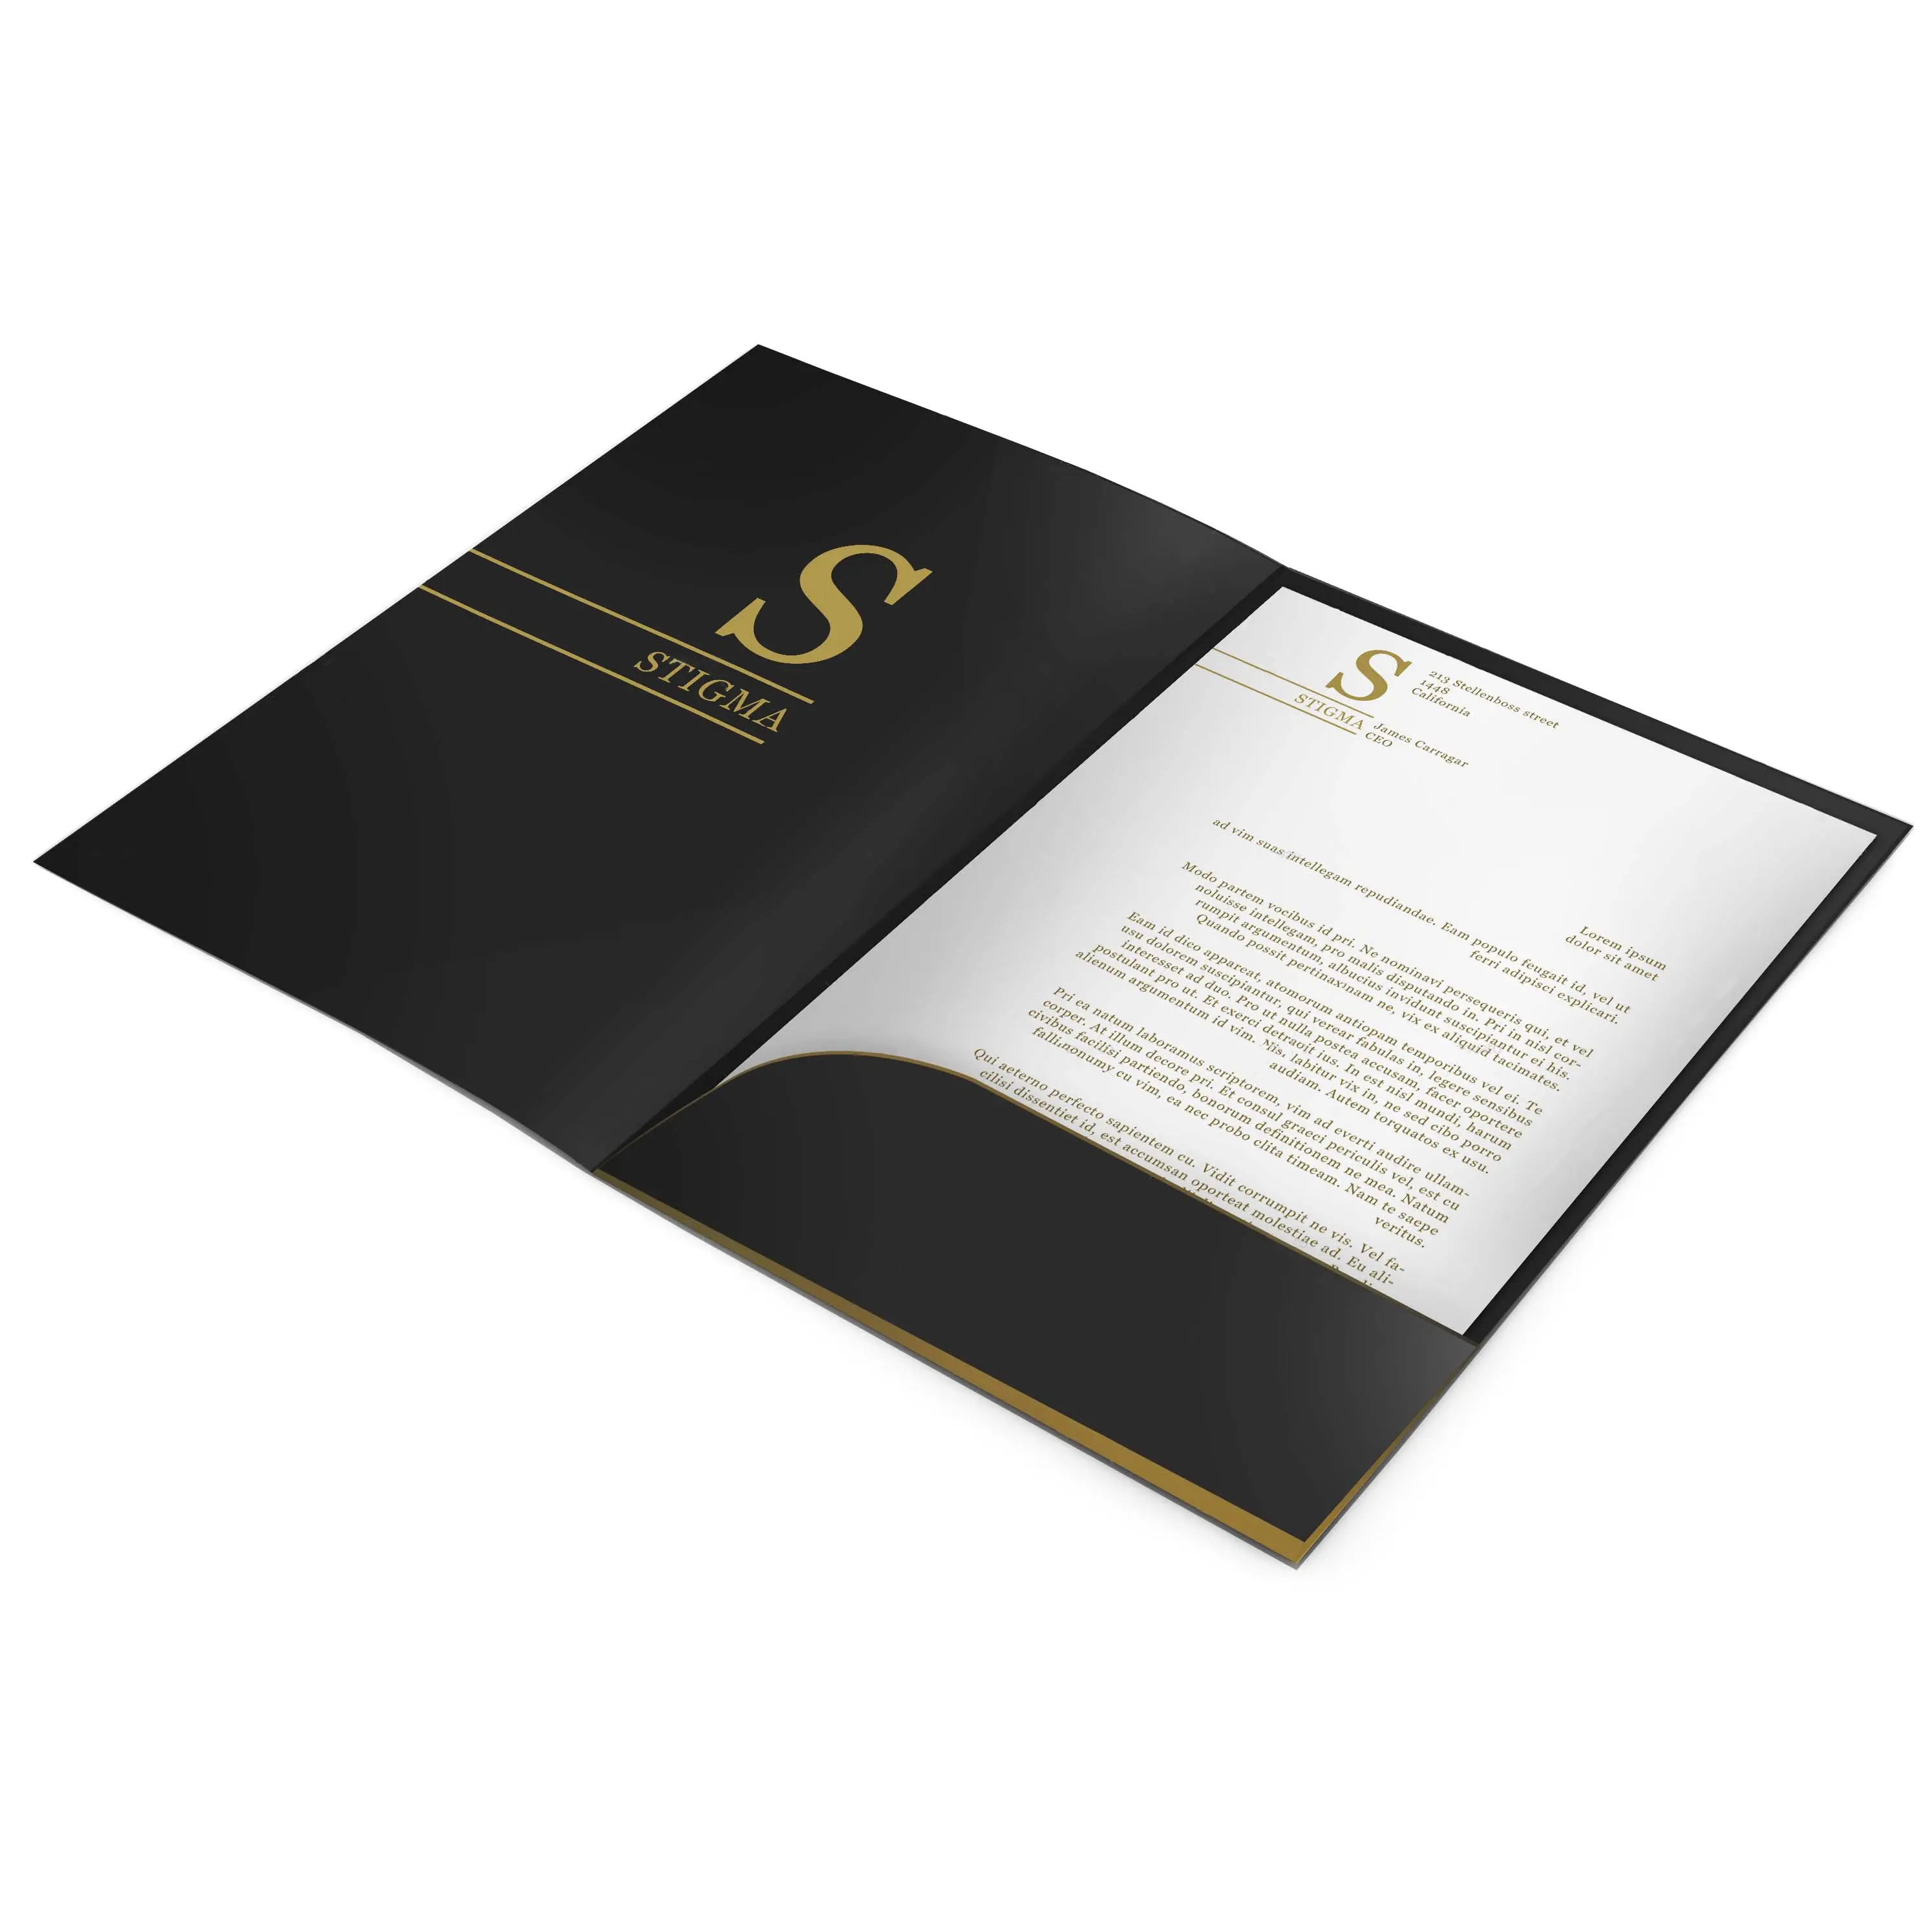 Carpeta de presentación promocional de bolsillo lateral de papel A4, soporte de tarjeta de invitación con impresión personalizada